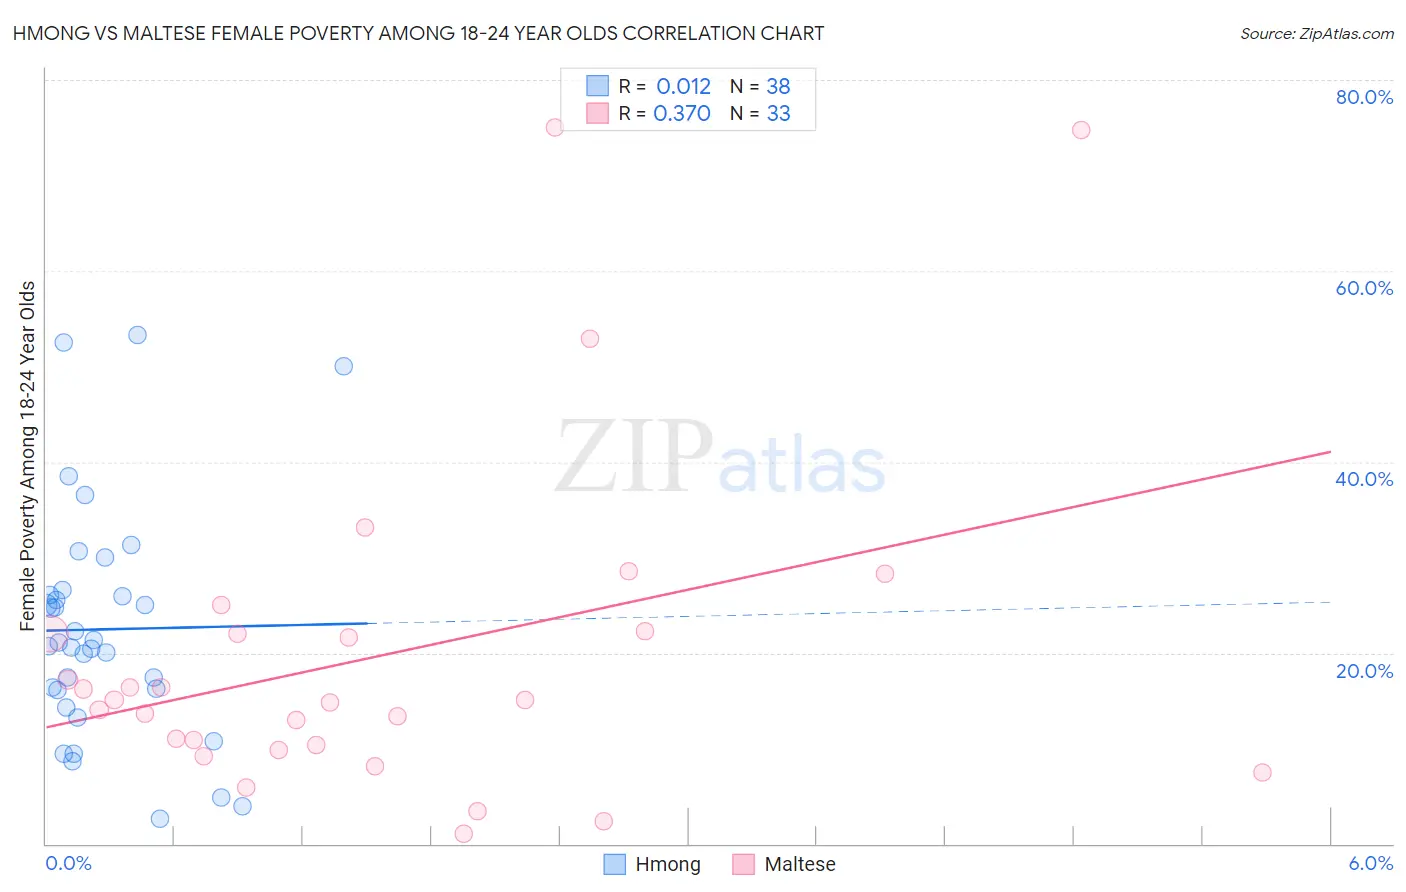 Hmong vs Maltese Female Poverty Among 18-24 Year Olds